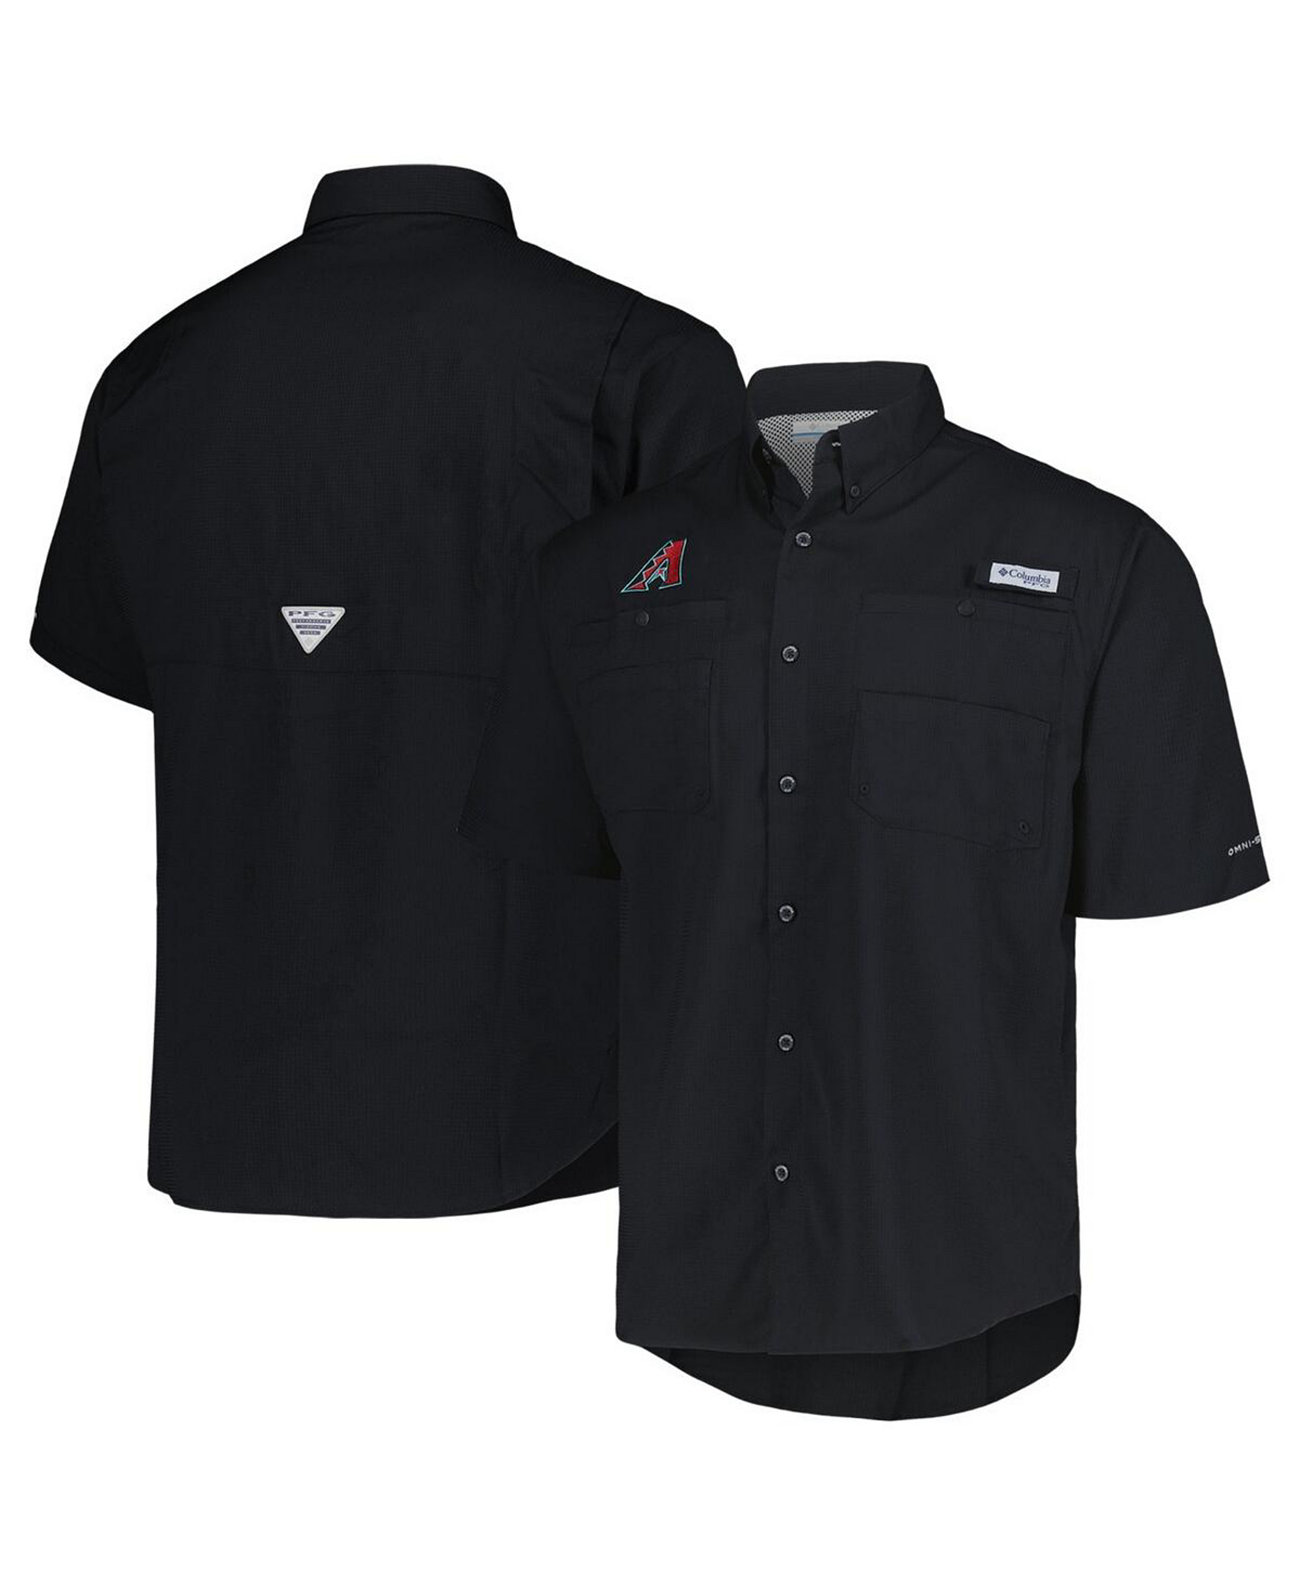 Men's Black Arizona Diamondbacks Tamiami Omni-Shade Button-Down Shirt Columbia